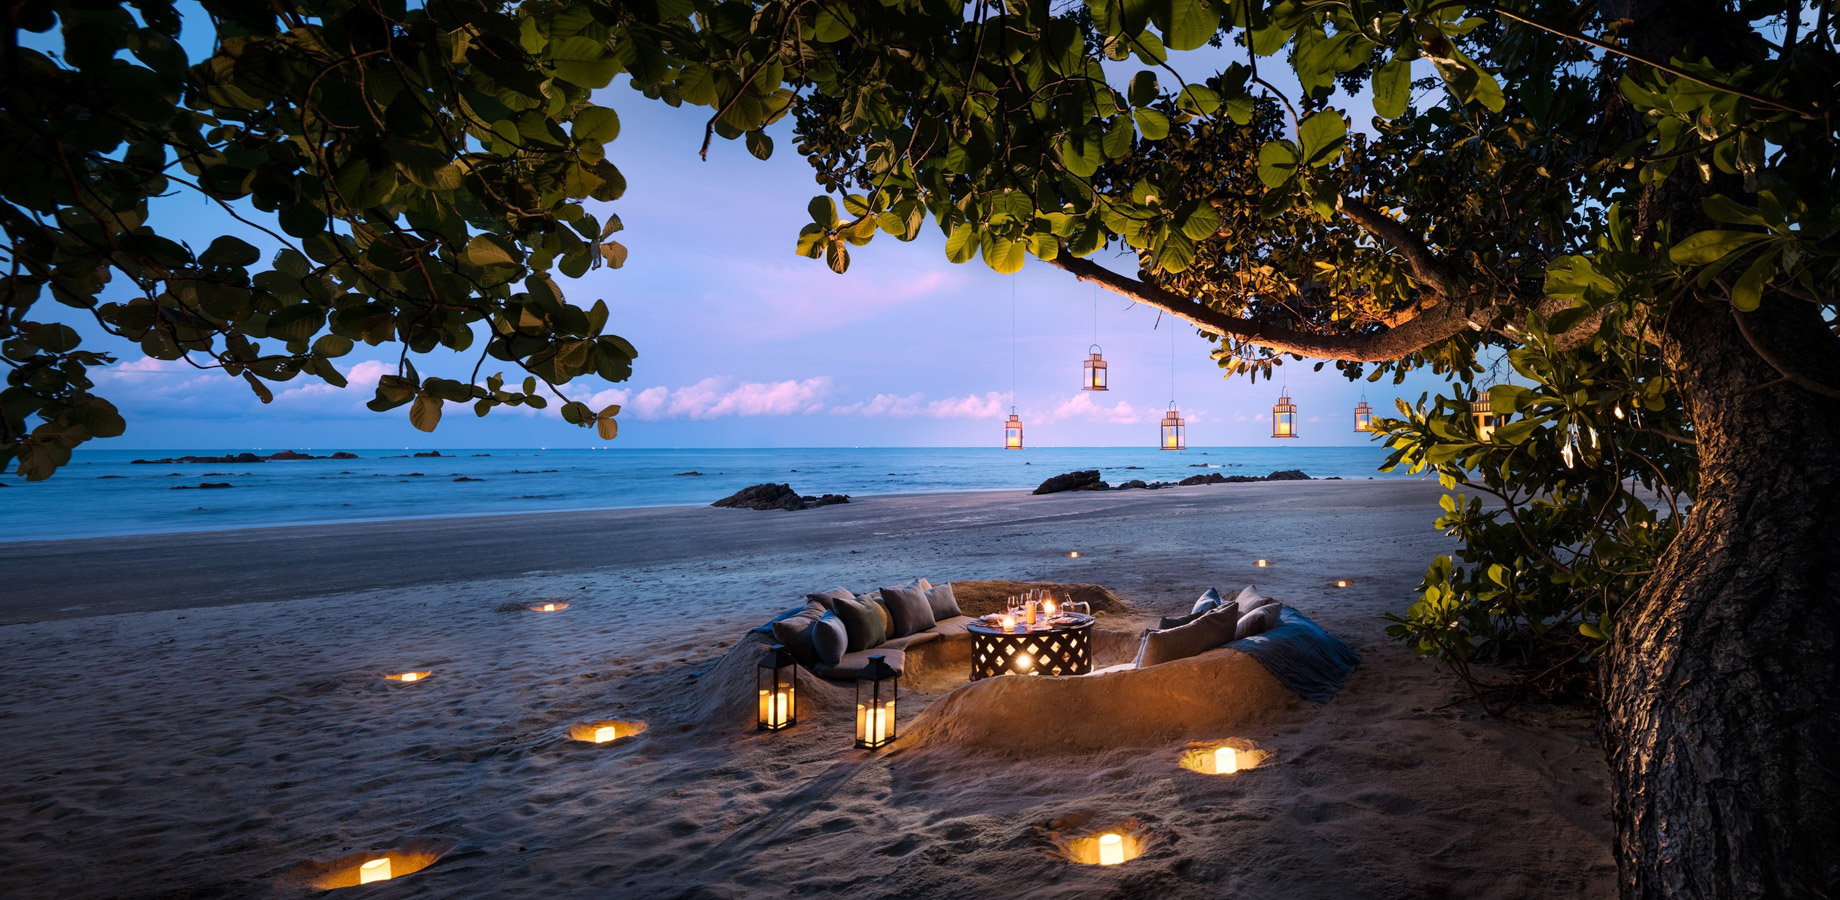 Anantara Desaru Coast Resort & Villas - Johor, Malaysia - Private Beach Dining Sunset